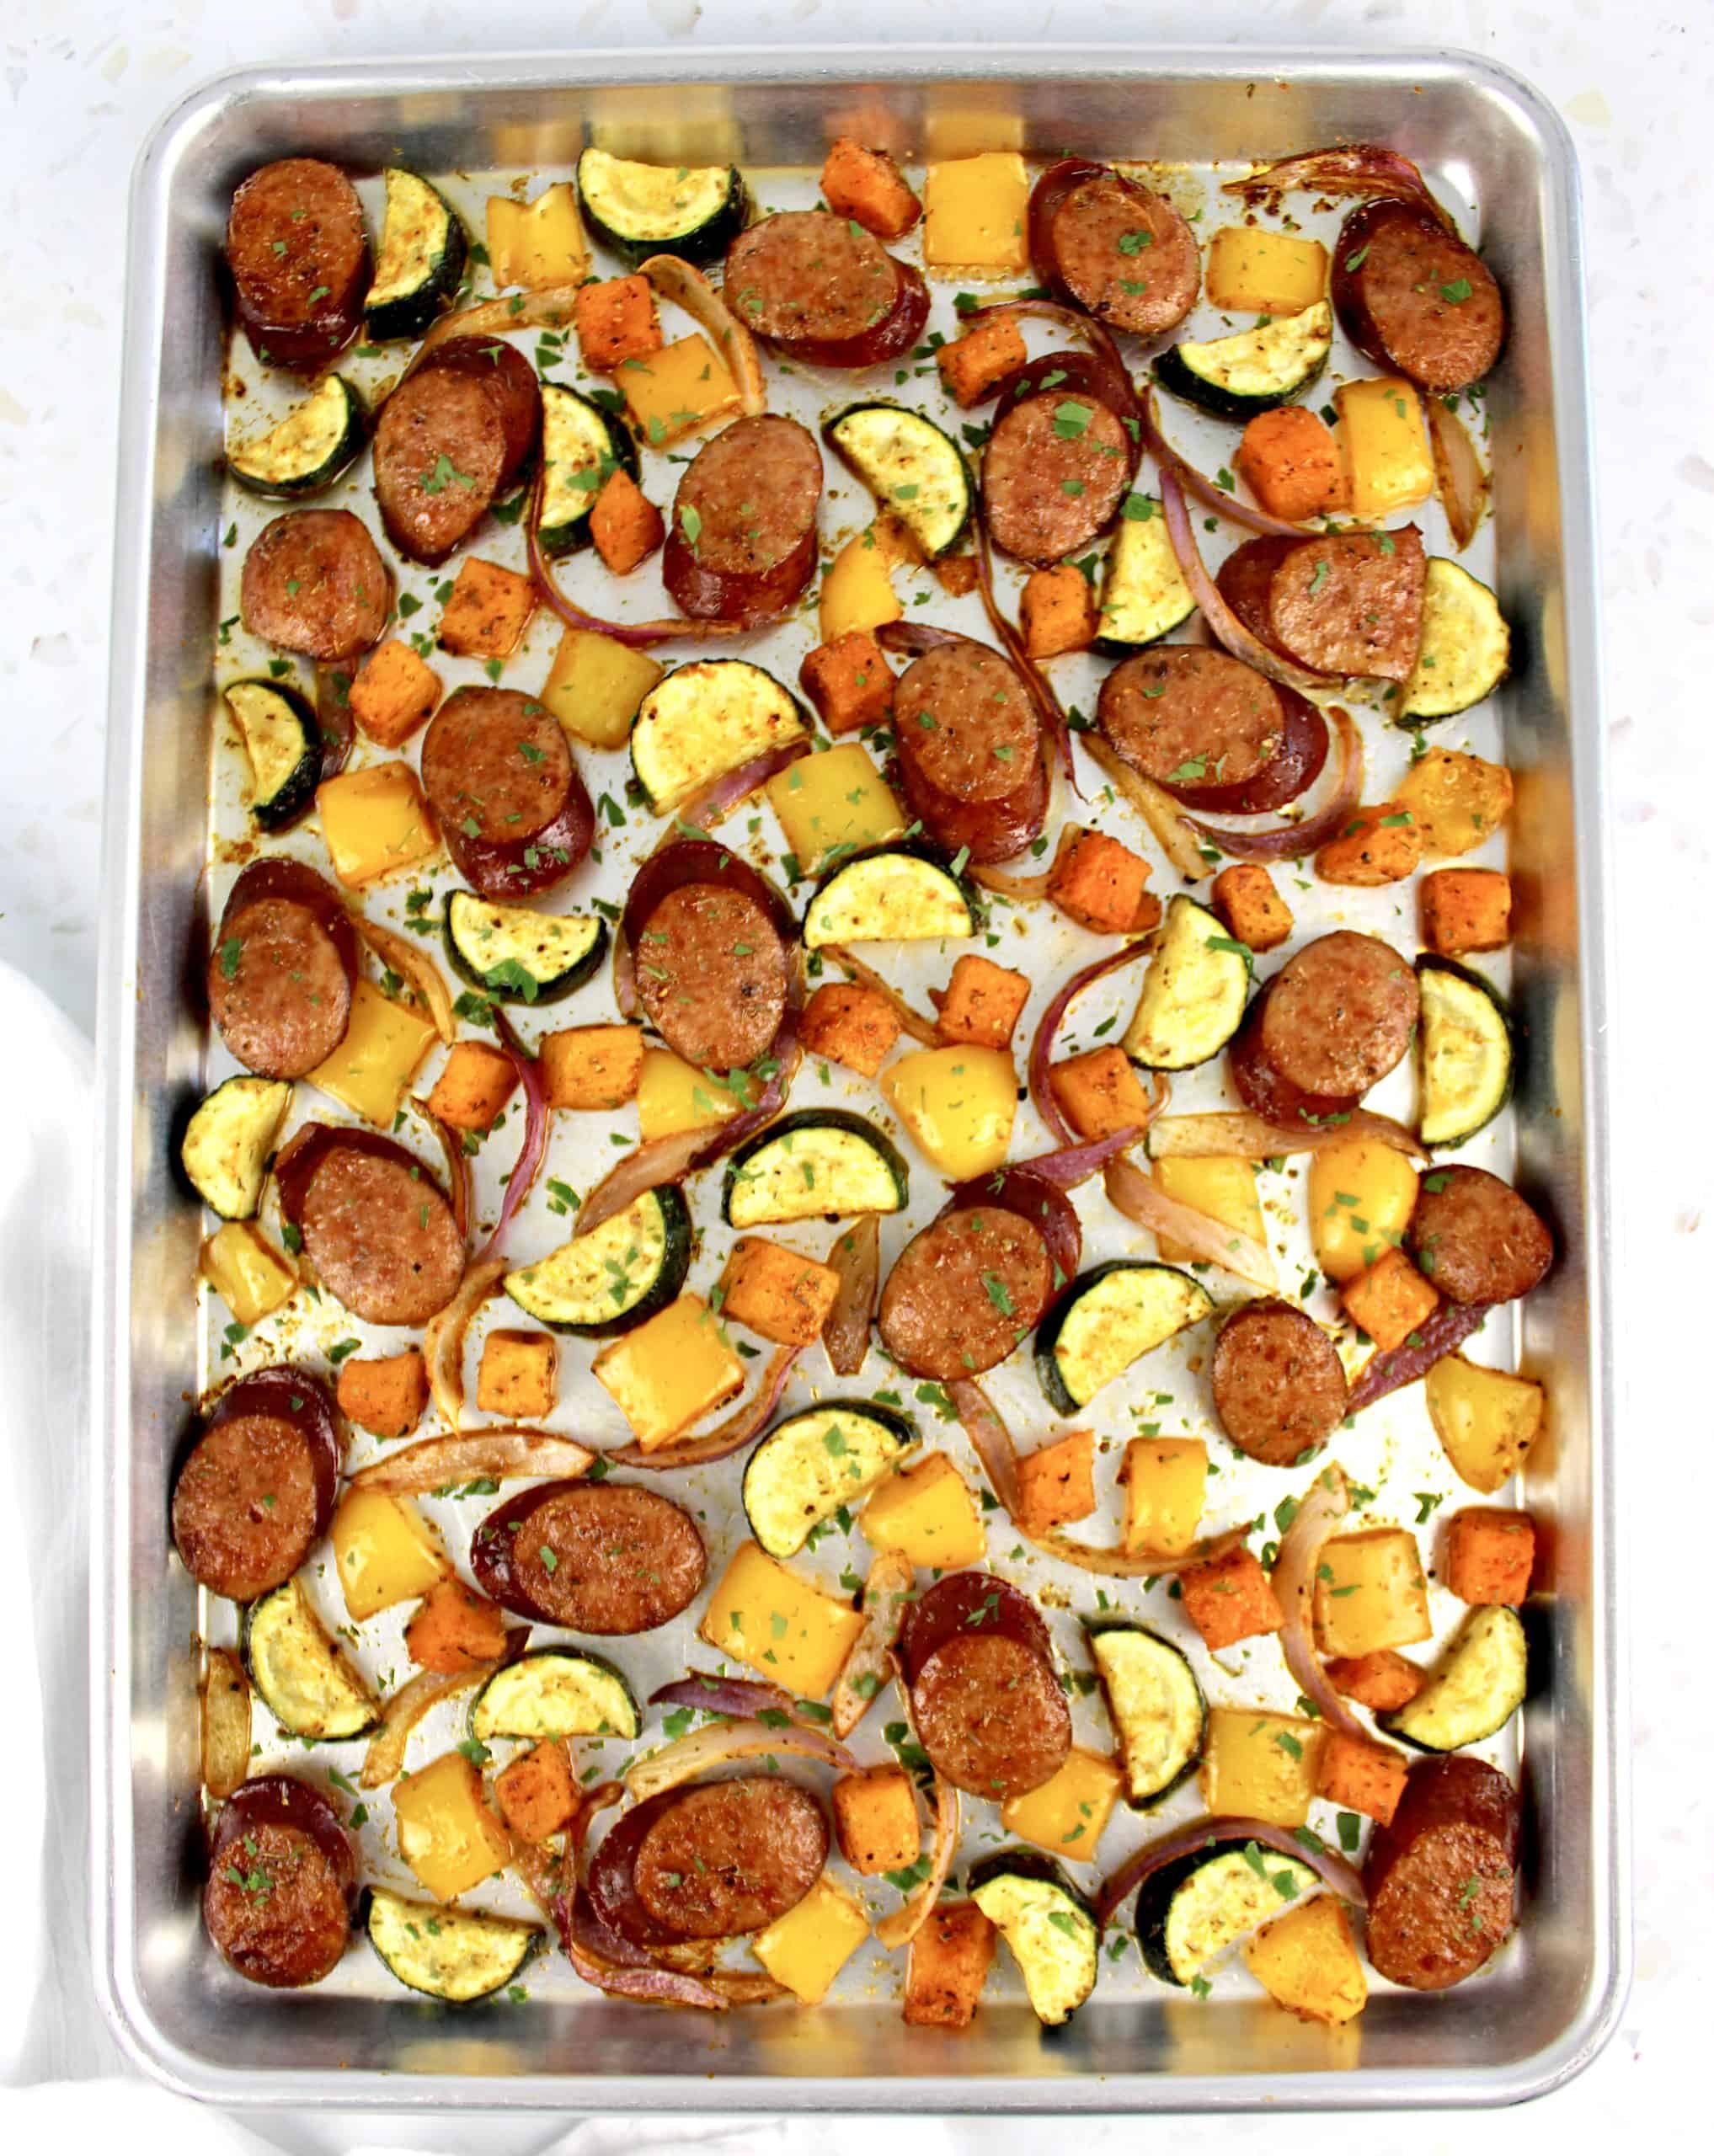 Sheet Pan Sausage and Veggies on baking sheet with chopped parsley